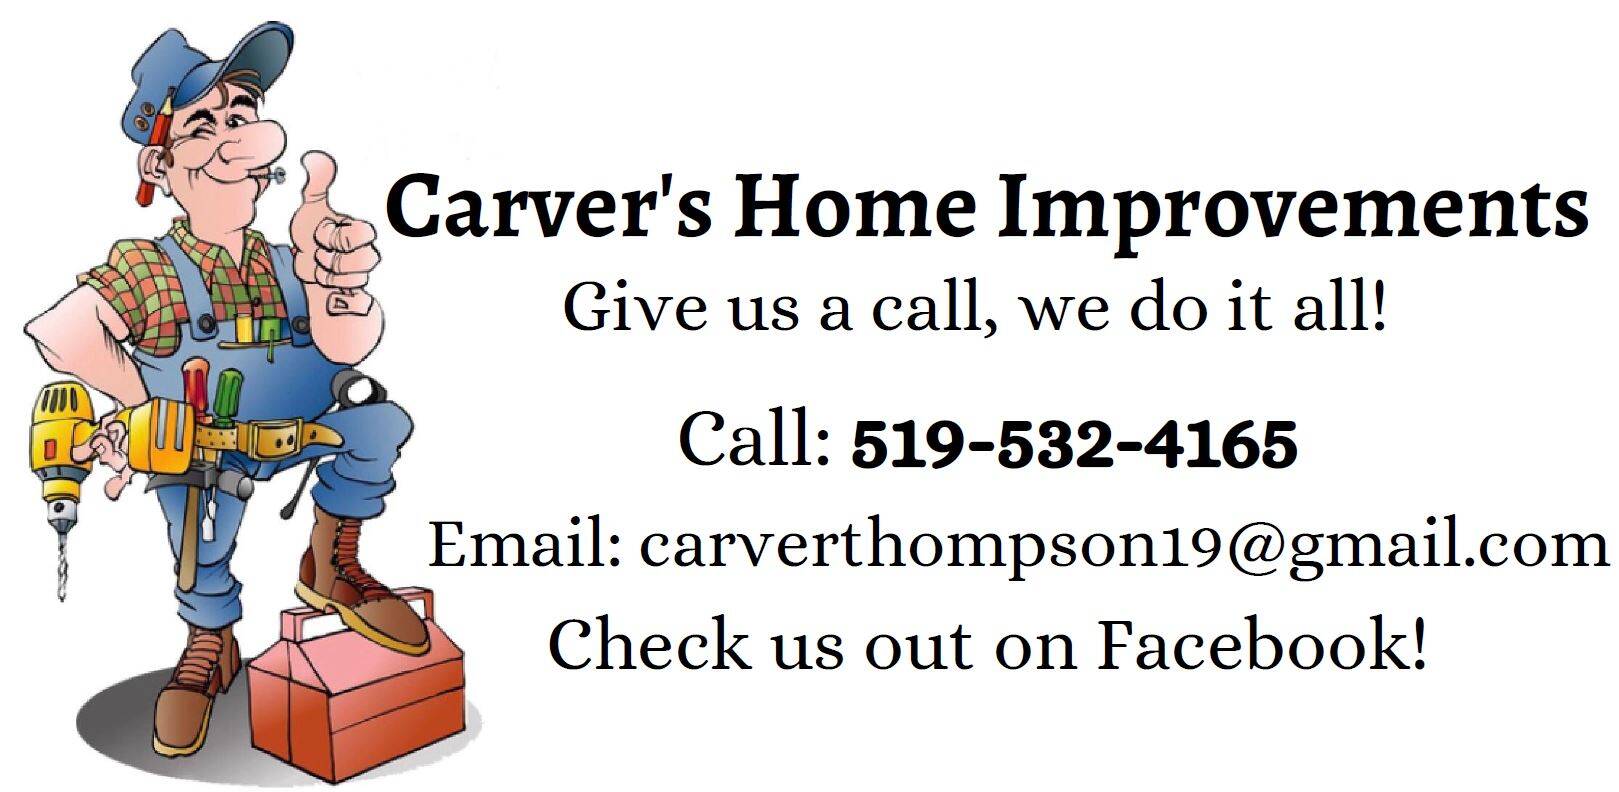 3 - SILVER Sponsor: Carvers Home Improvement''s